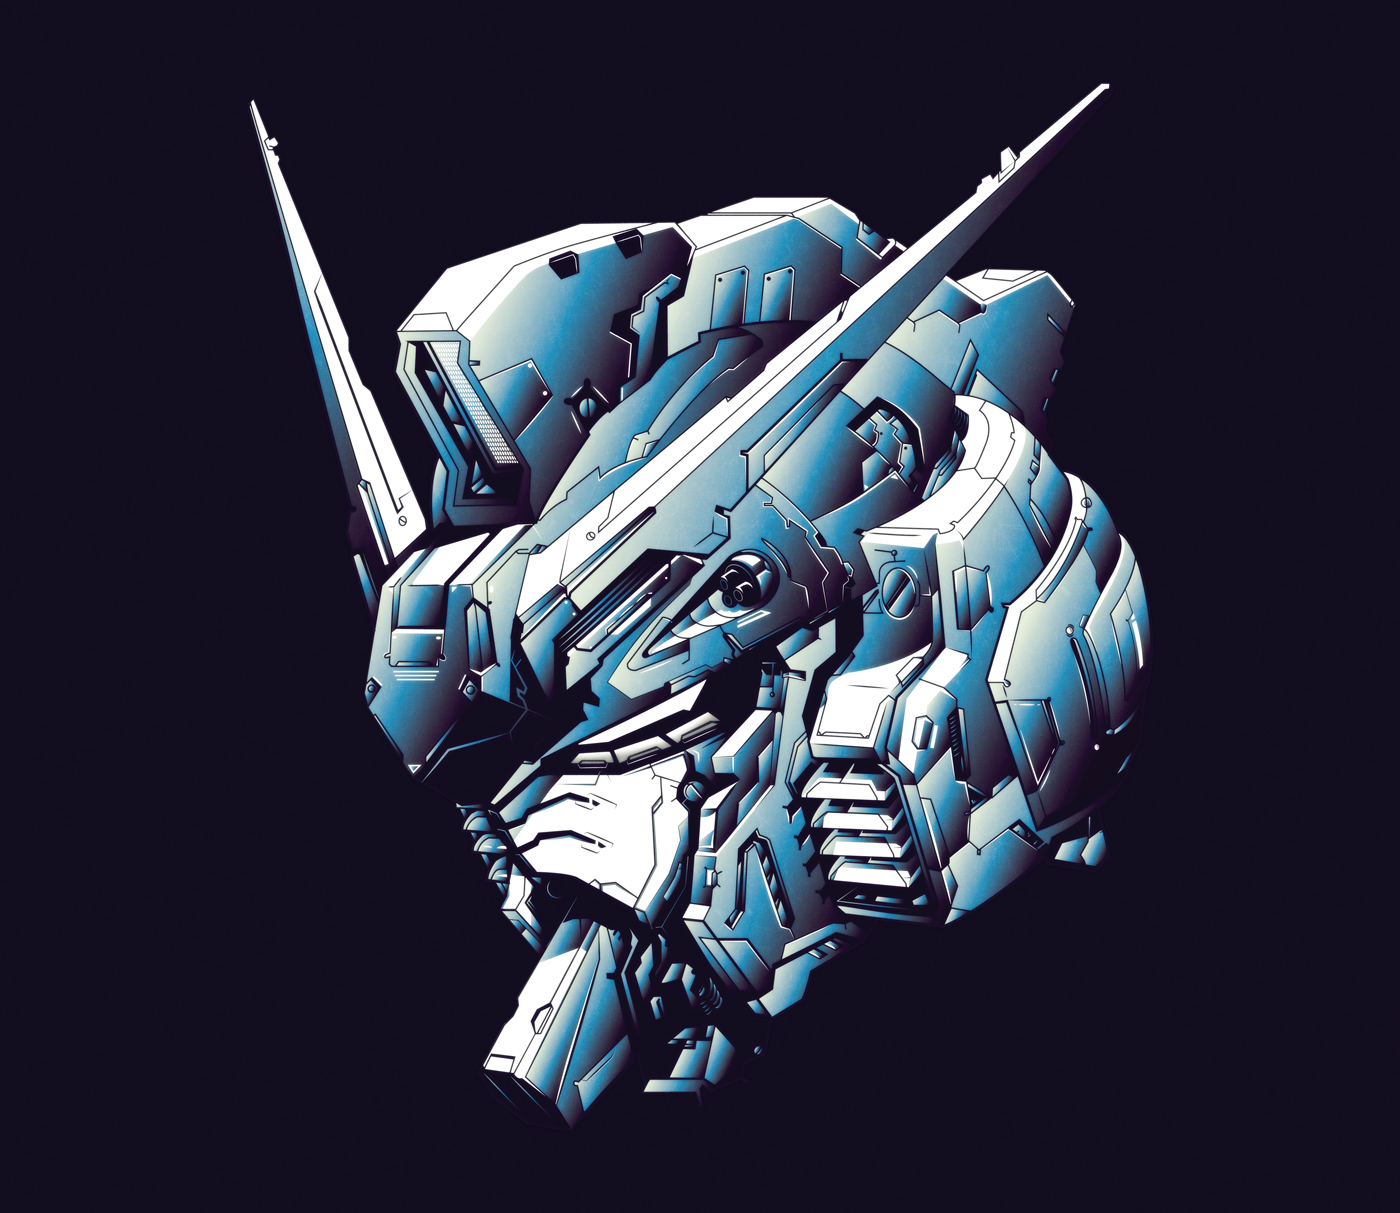 Gundam mobile suit mecha robot mech 08th ms ground type Armor knight vector